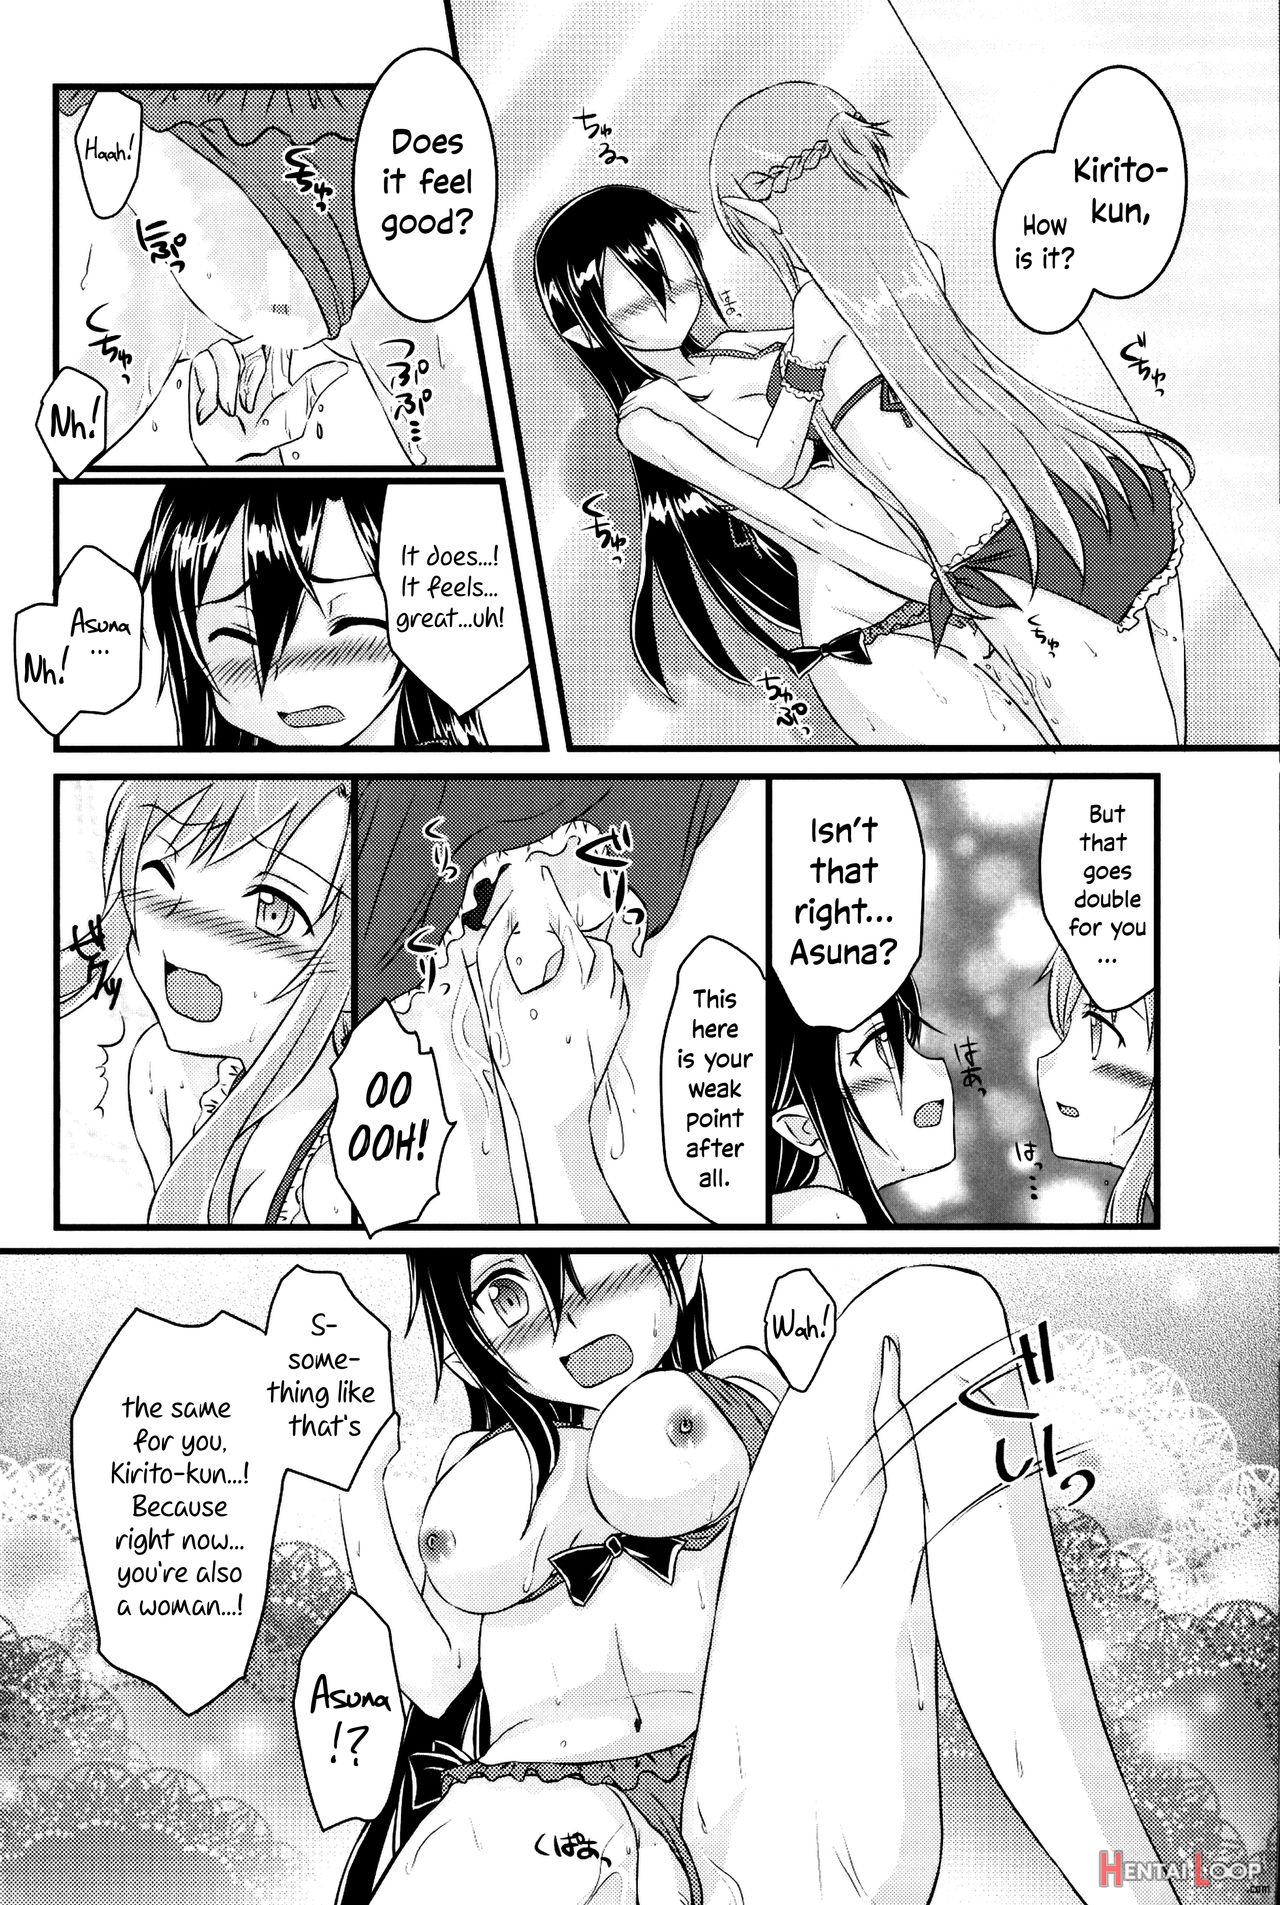 Kiriko-chan To Asobou! 3 page 9